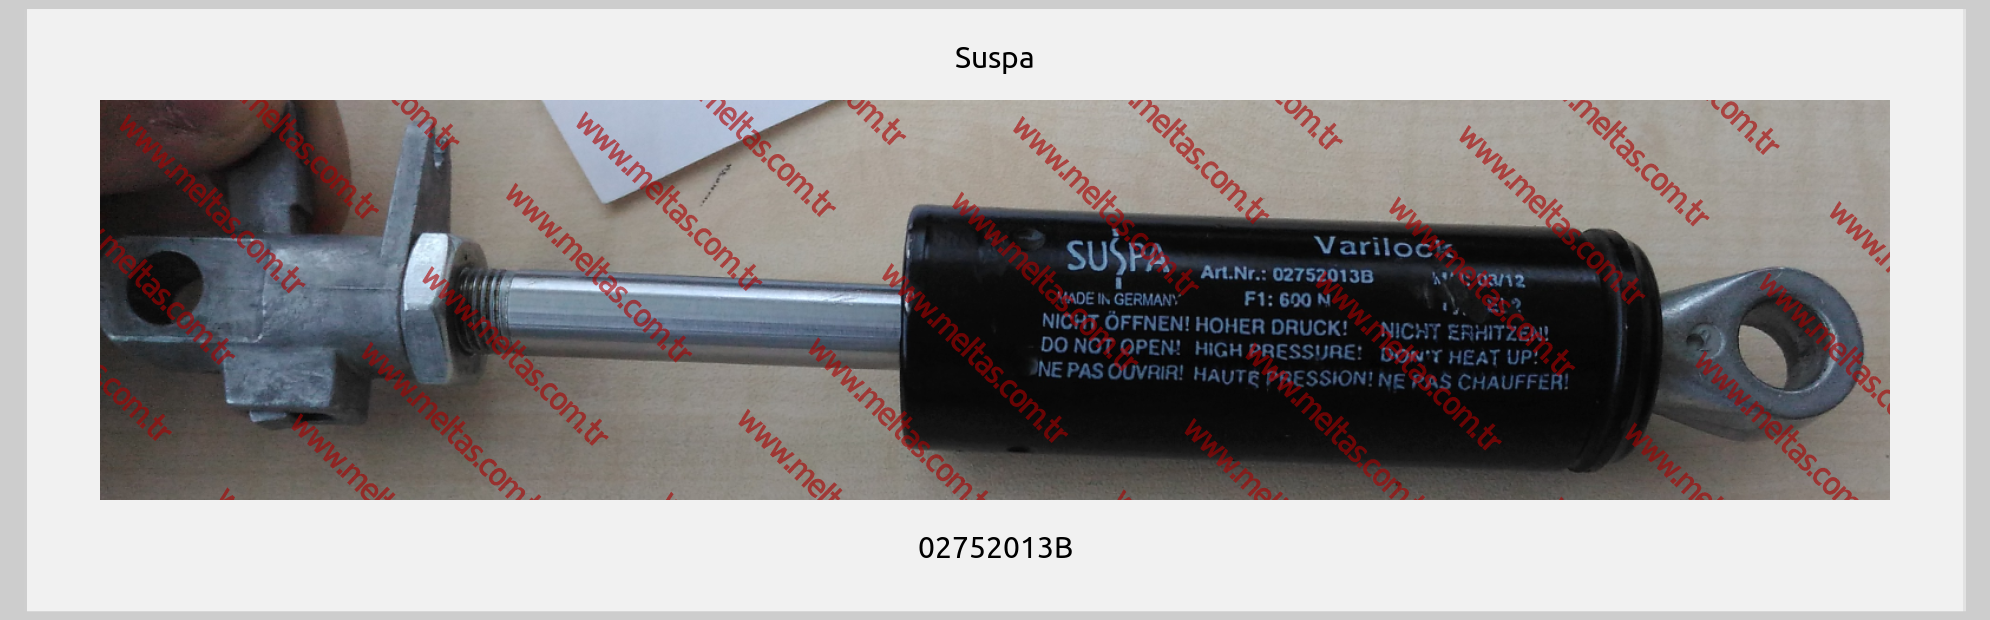 Suspa - 02752013B